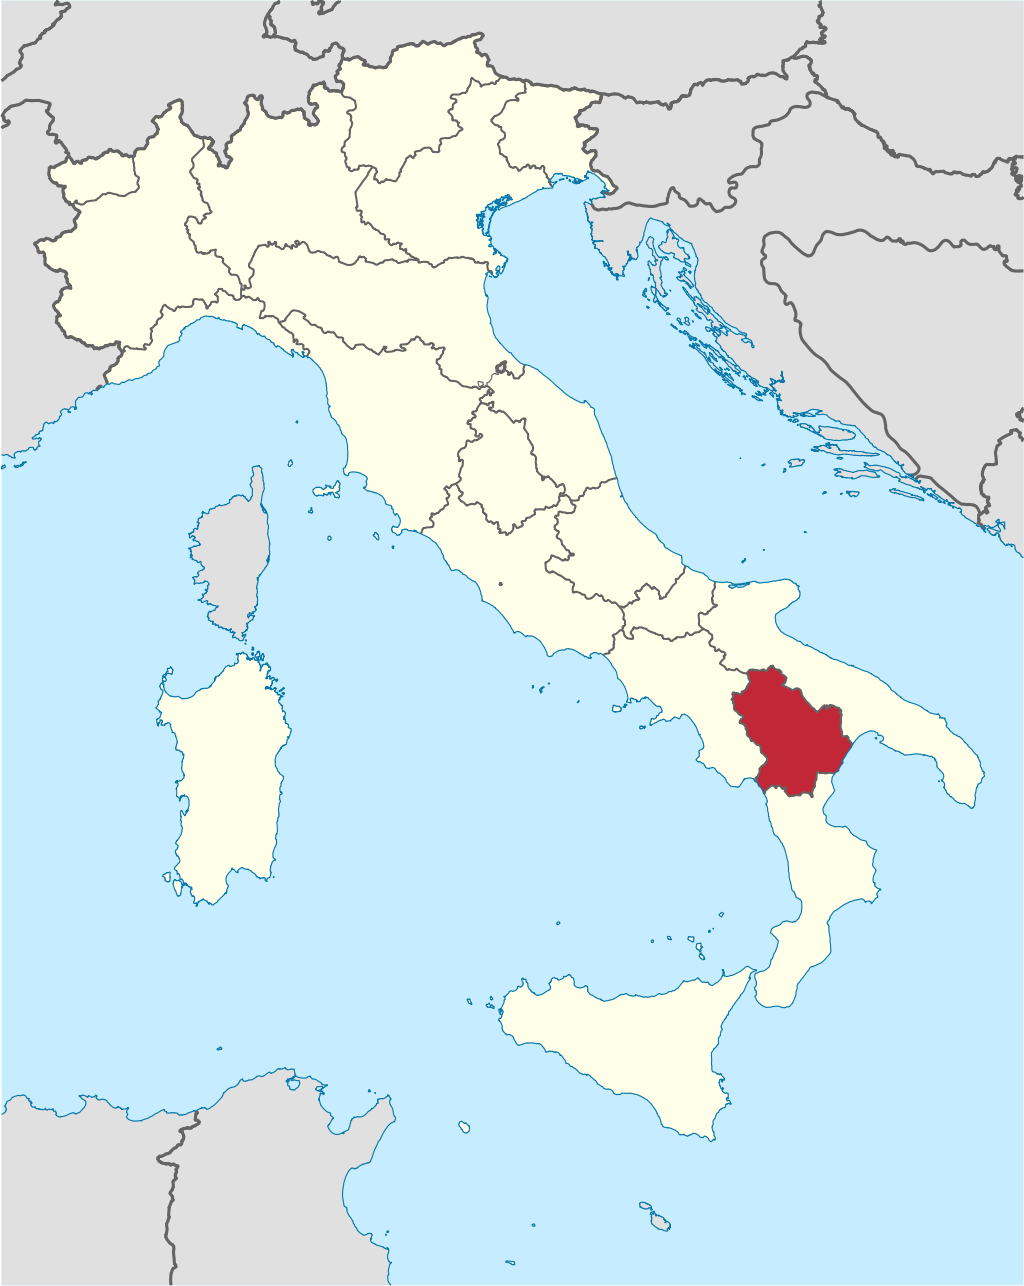 Village Iverna Urbex location or around the region Basilicata (Matera), Italy